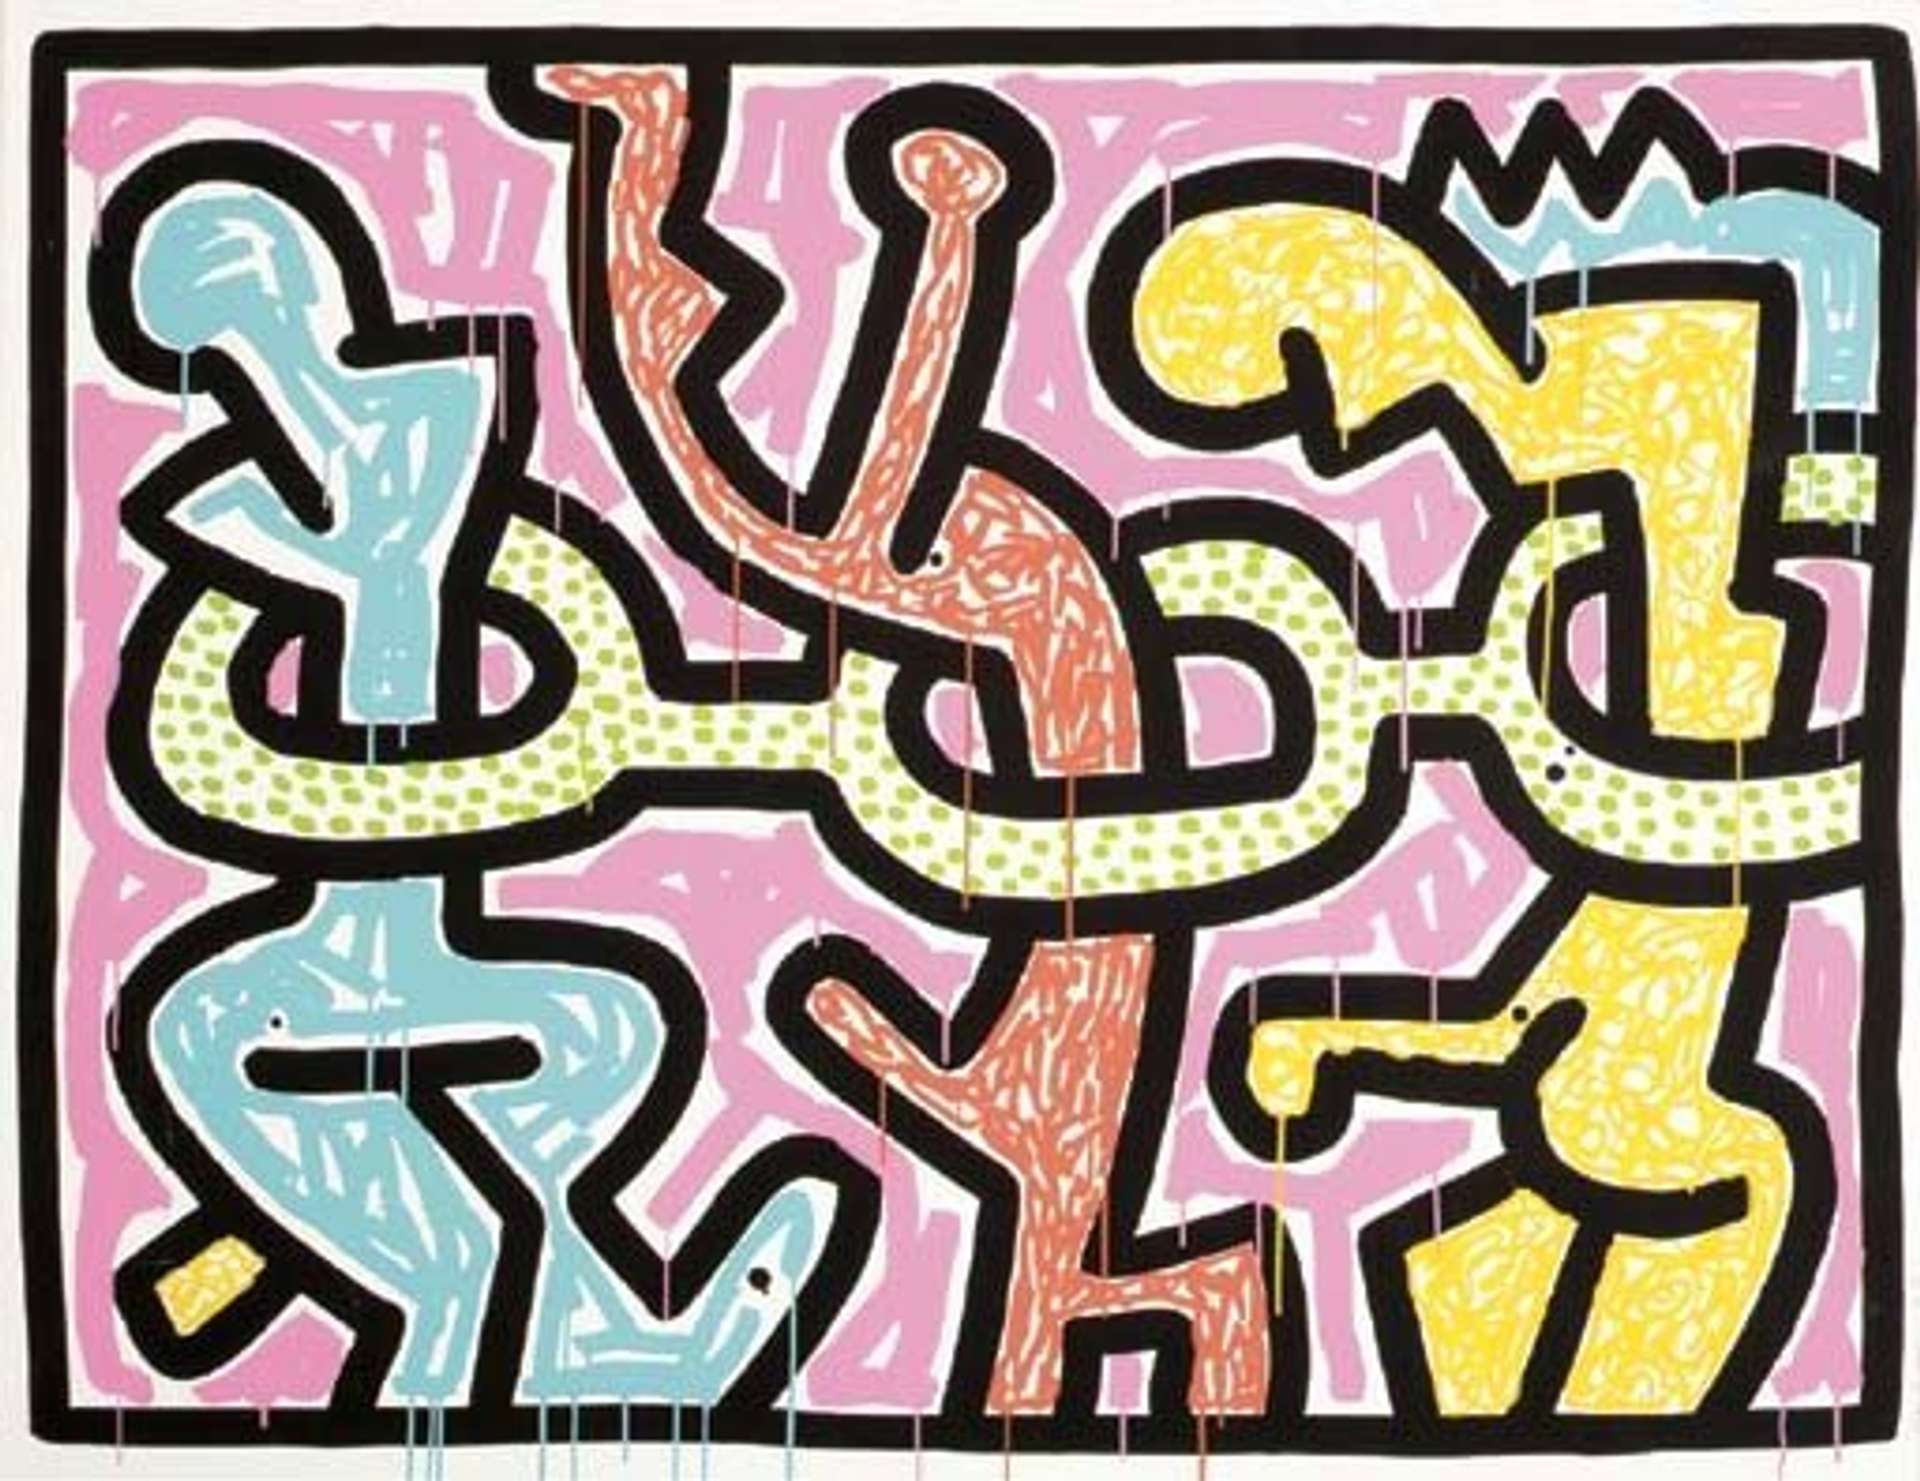 Flowers II by Keith Haring